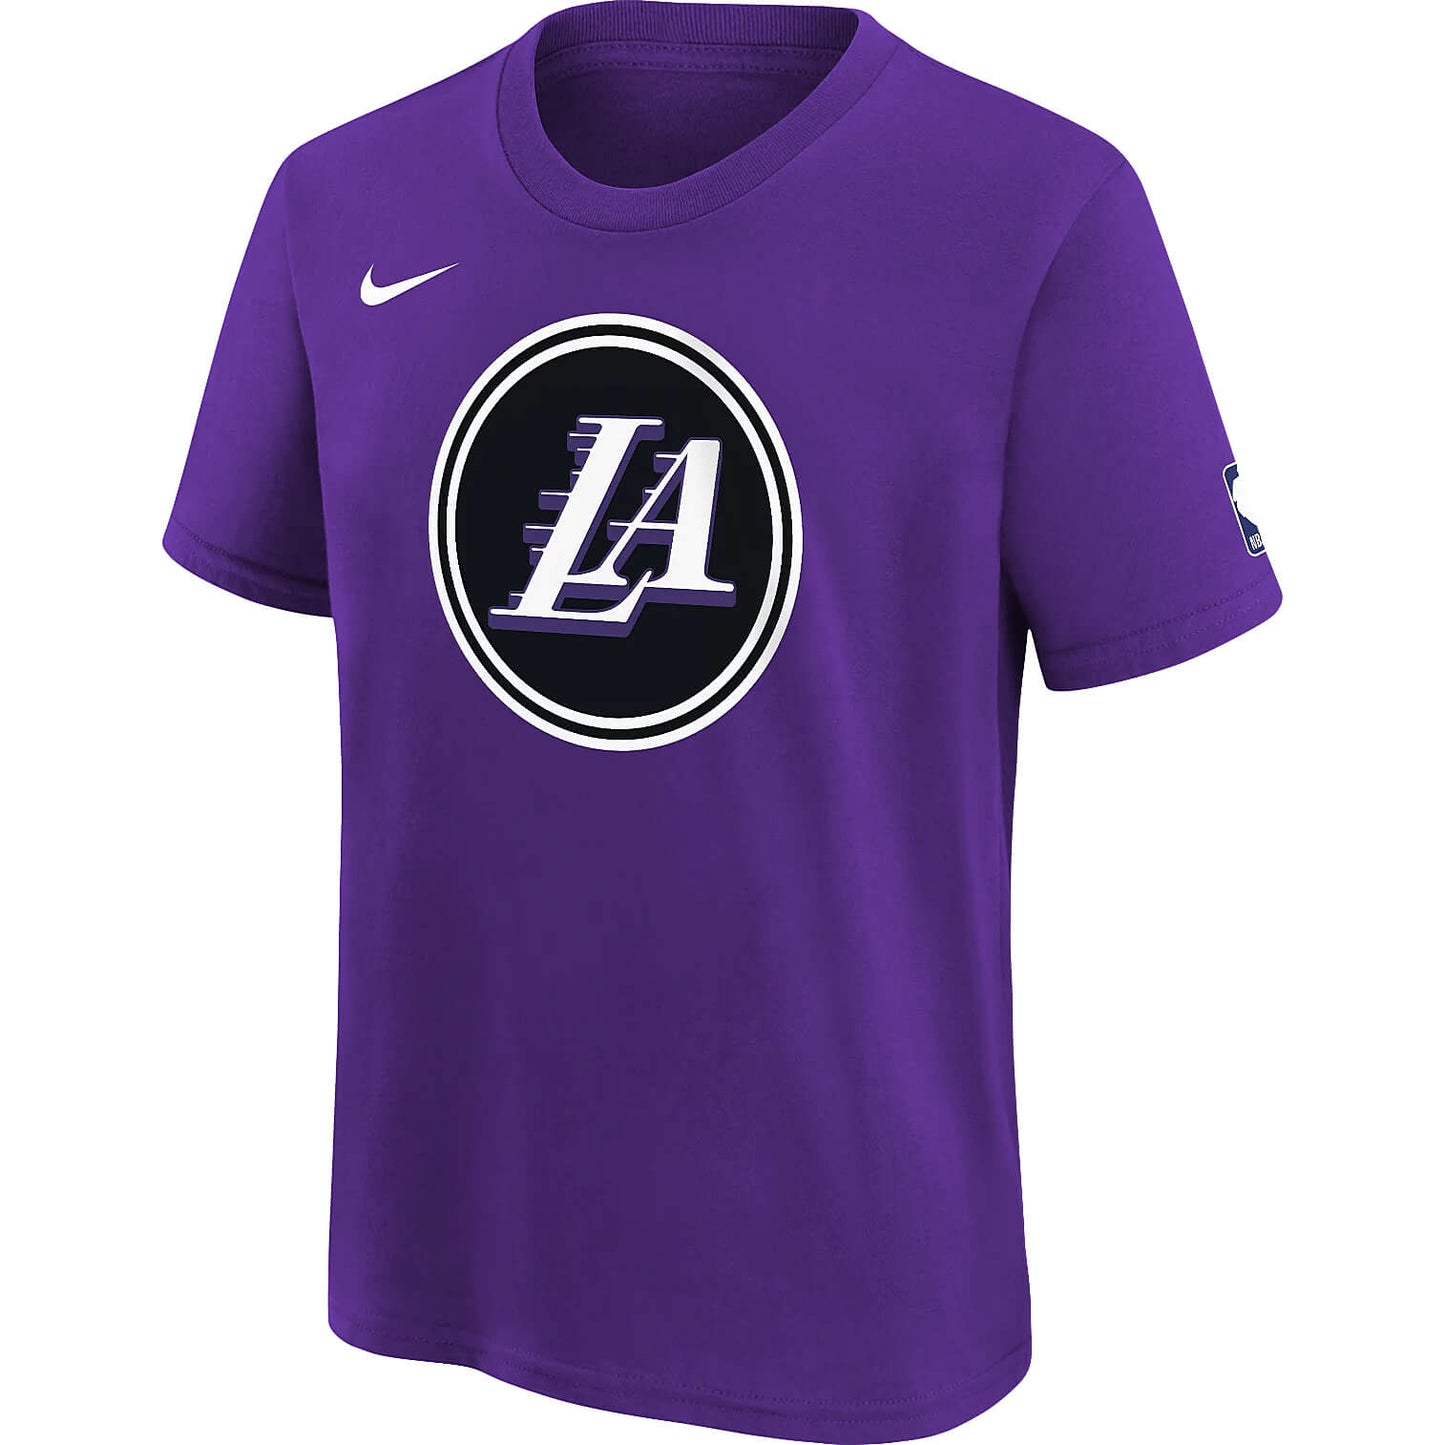 Nike Nk Essential Ce Logo Ss - 8-20Y - La Lakers Purple/Black